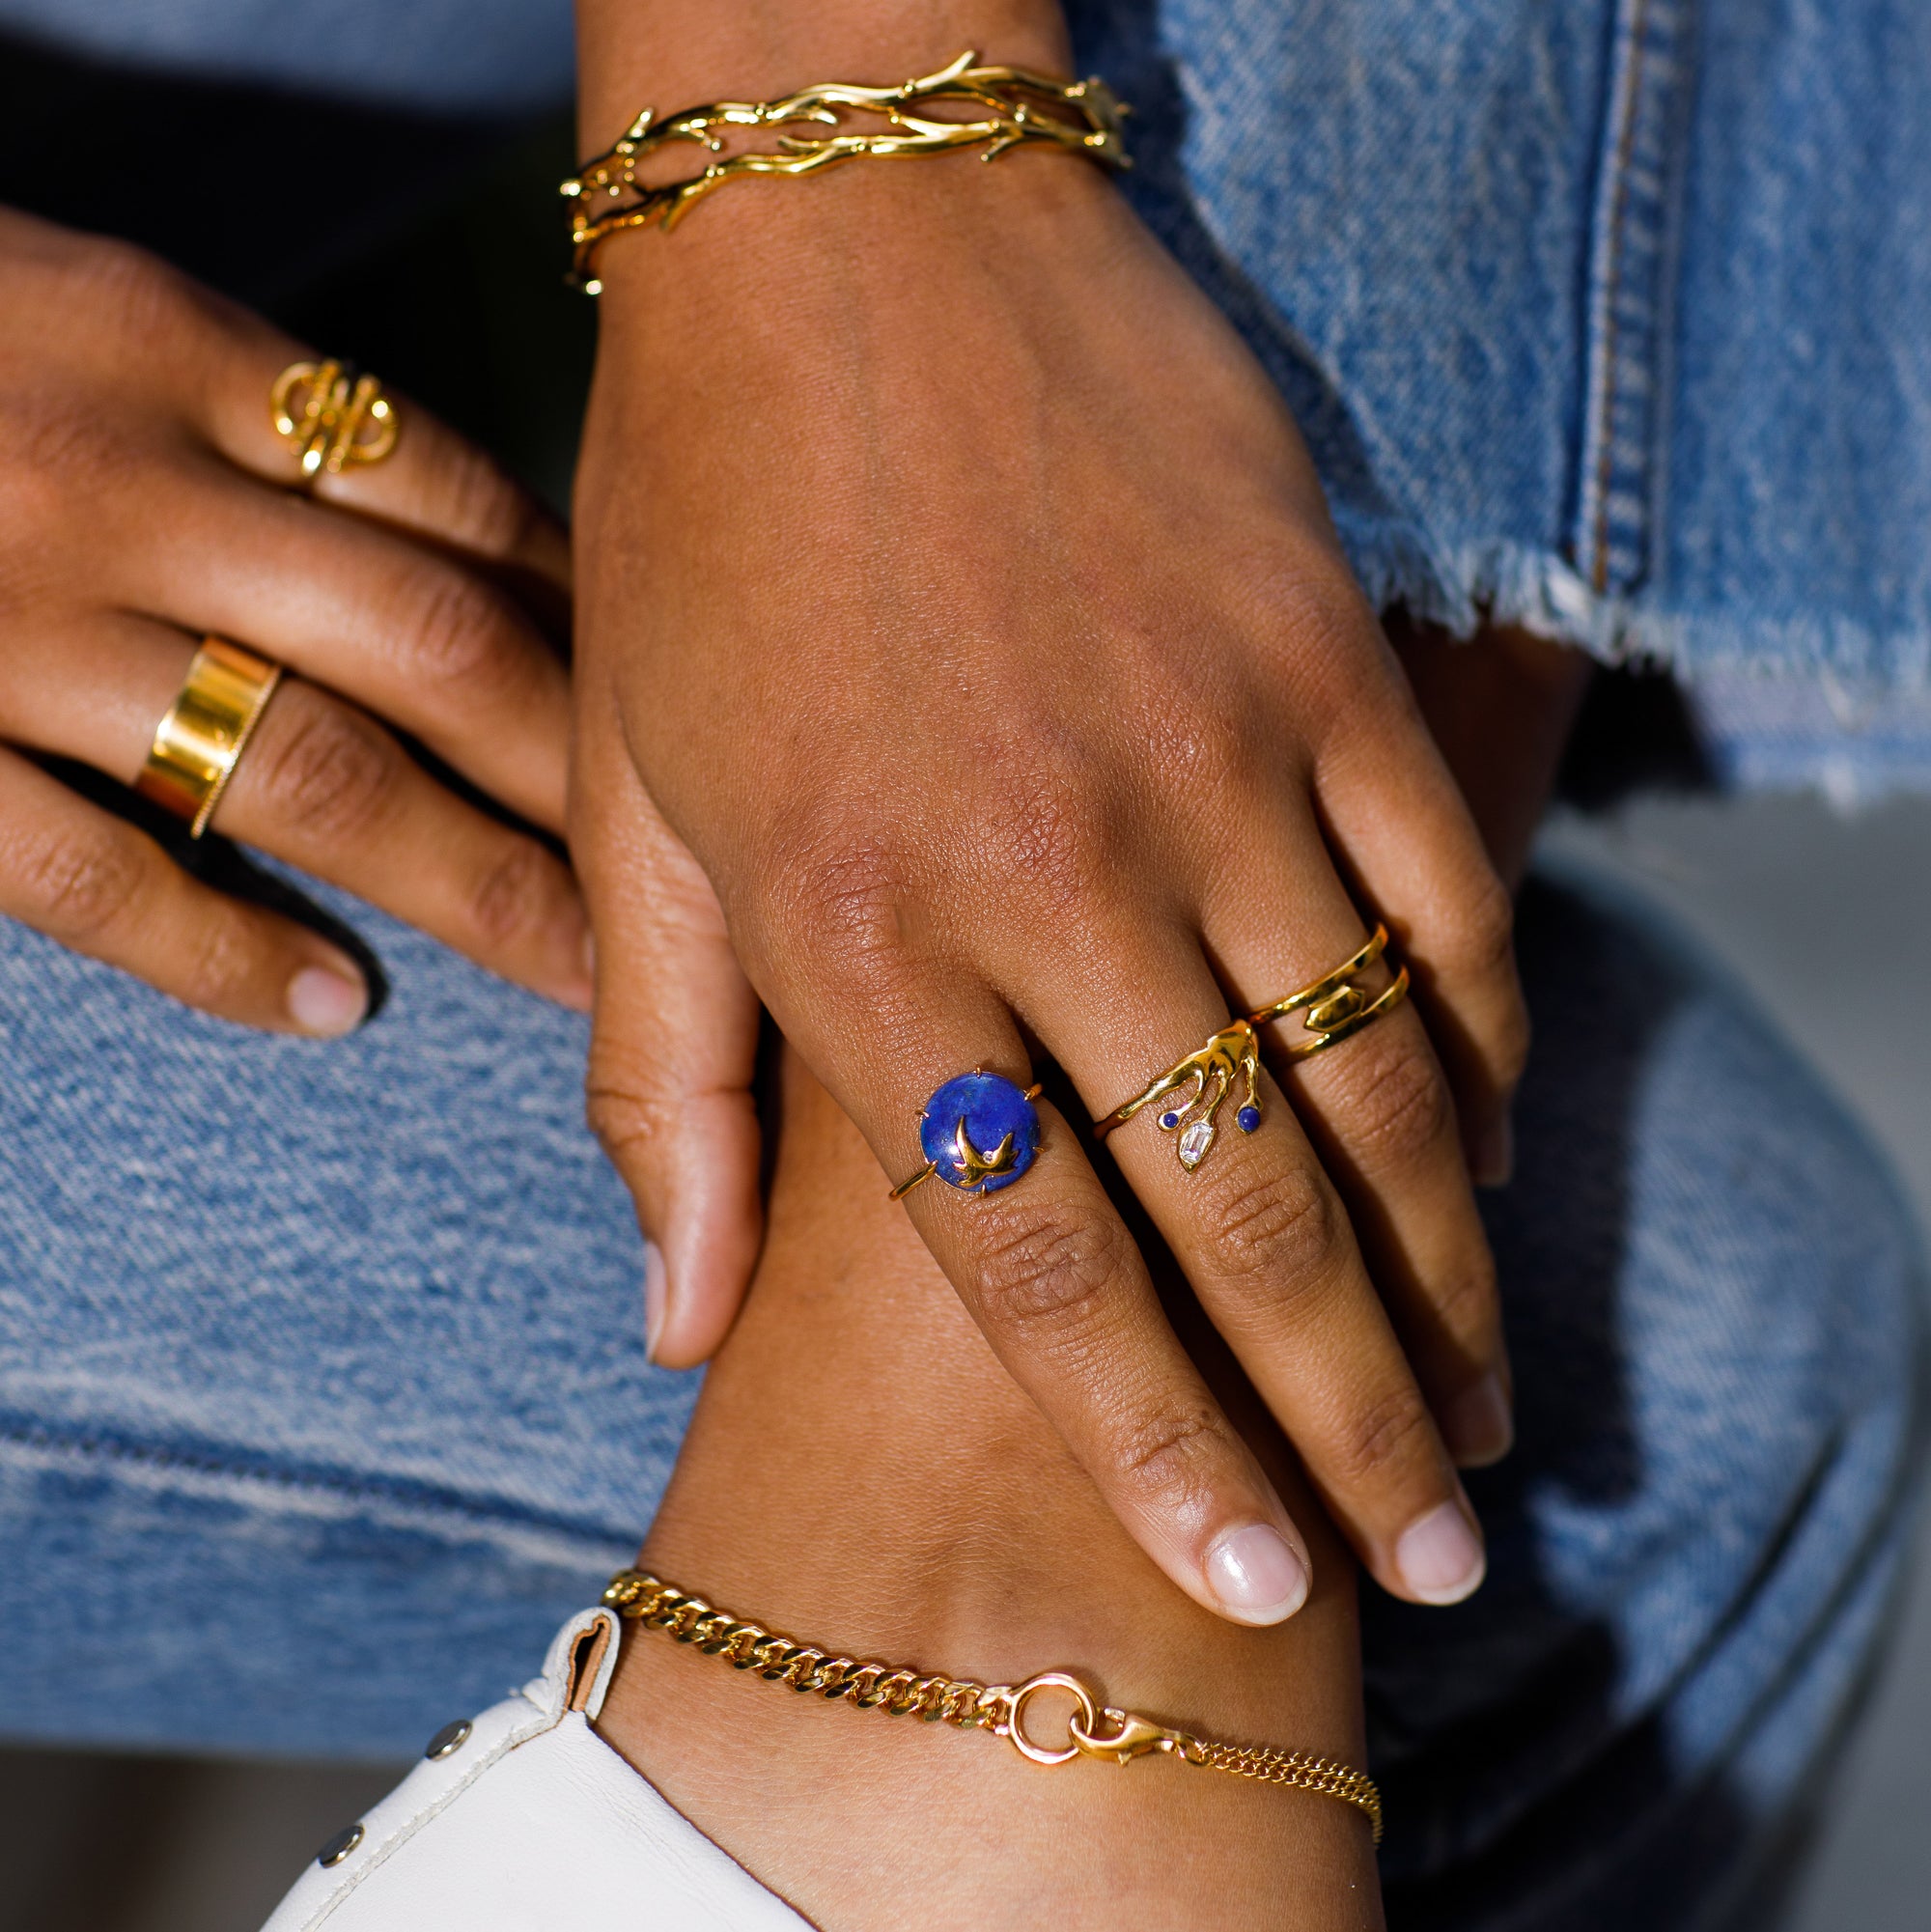 gold vermeil and lapis lazuli ring